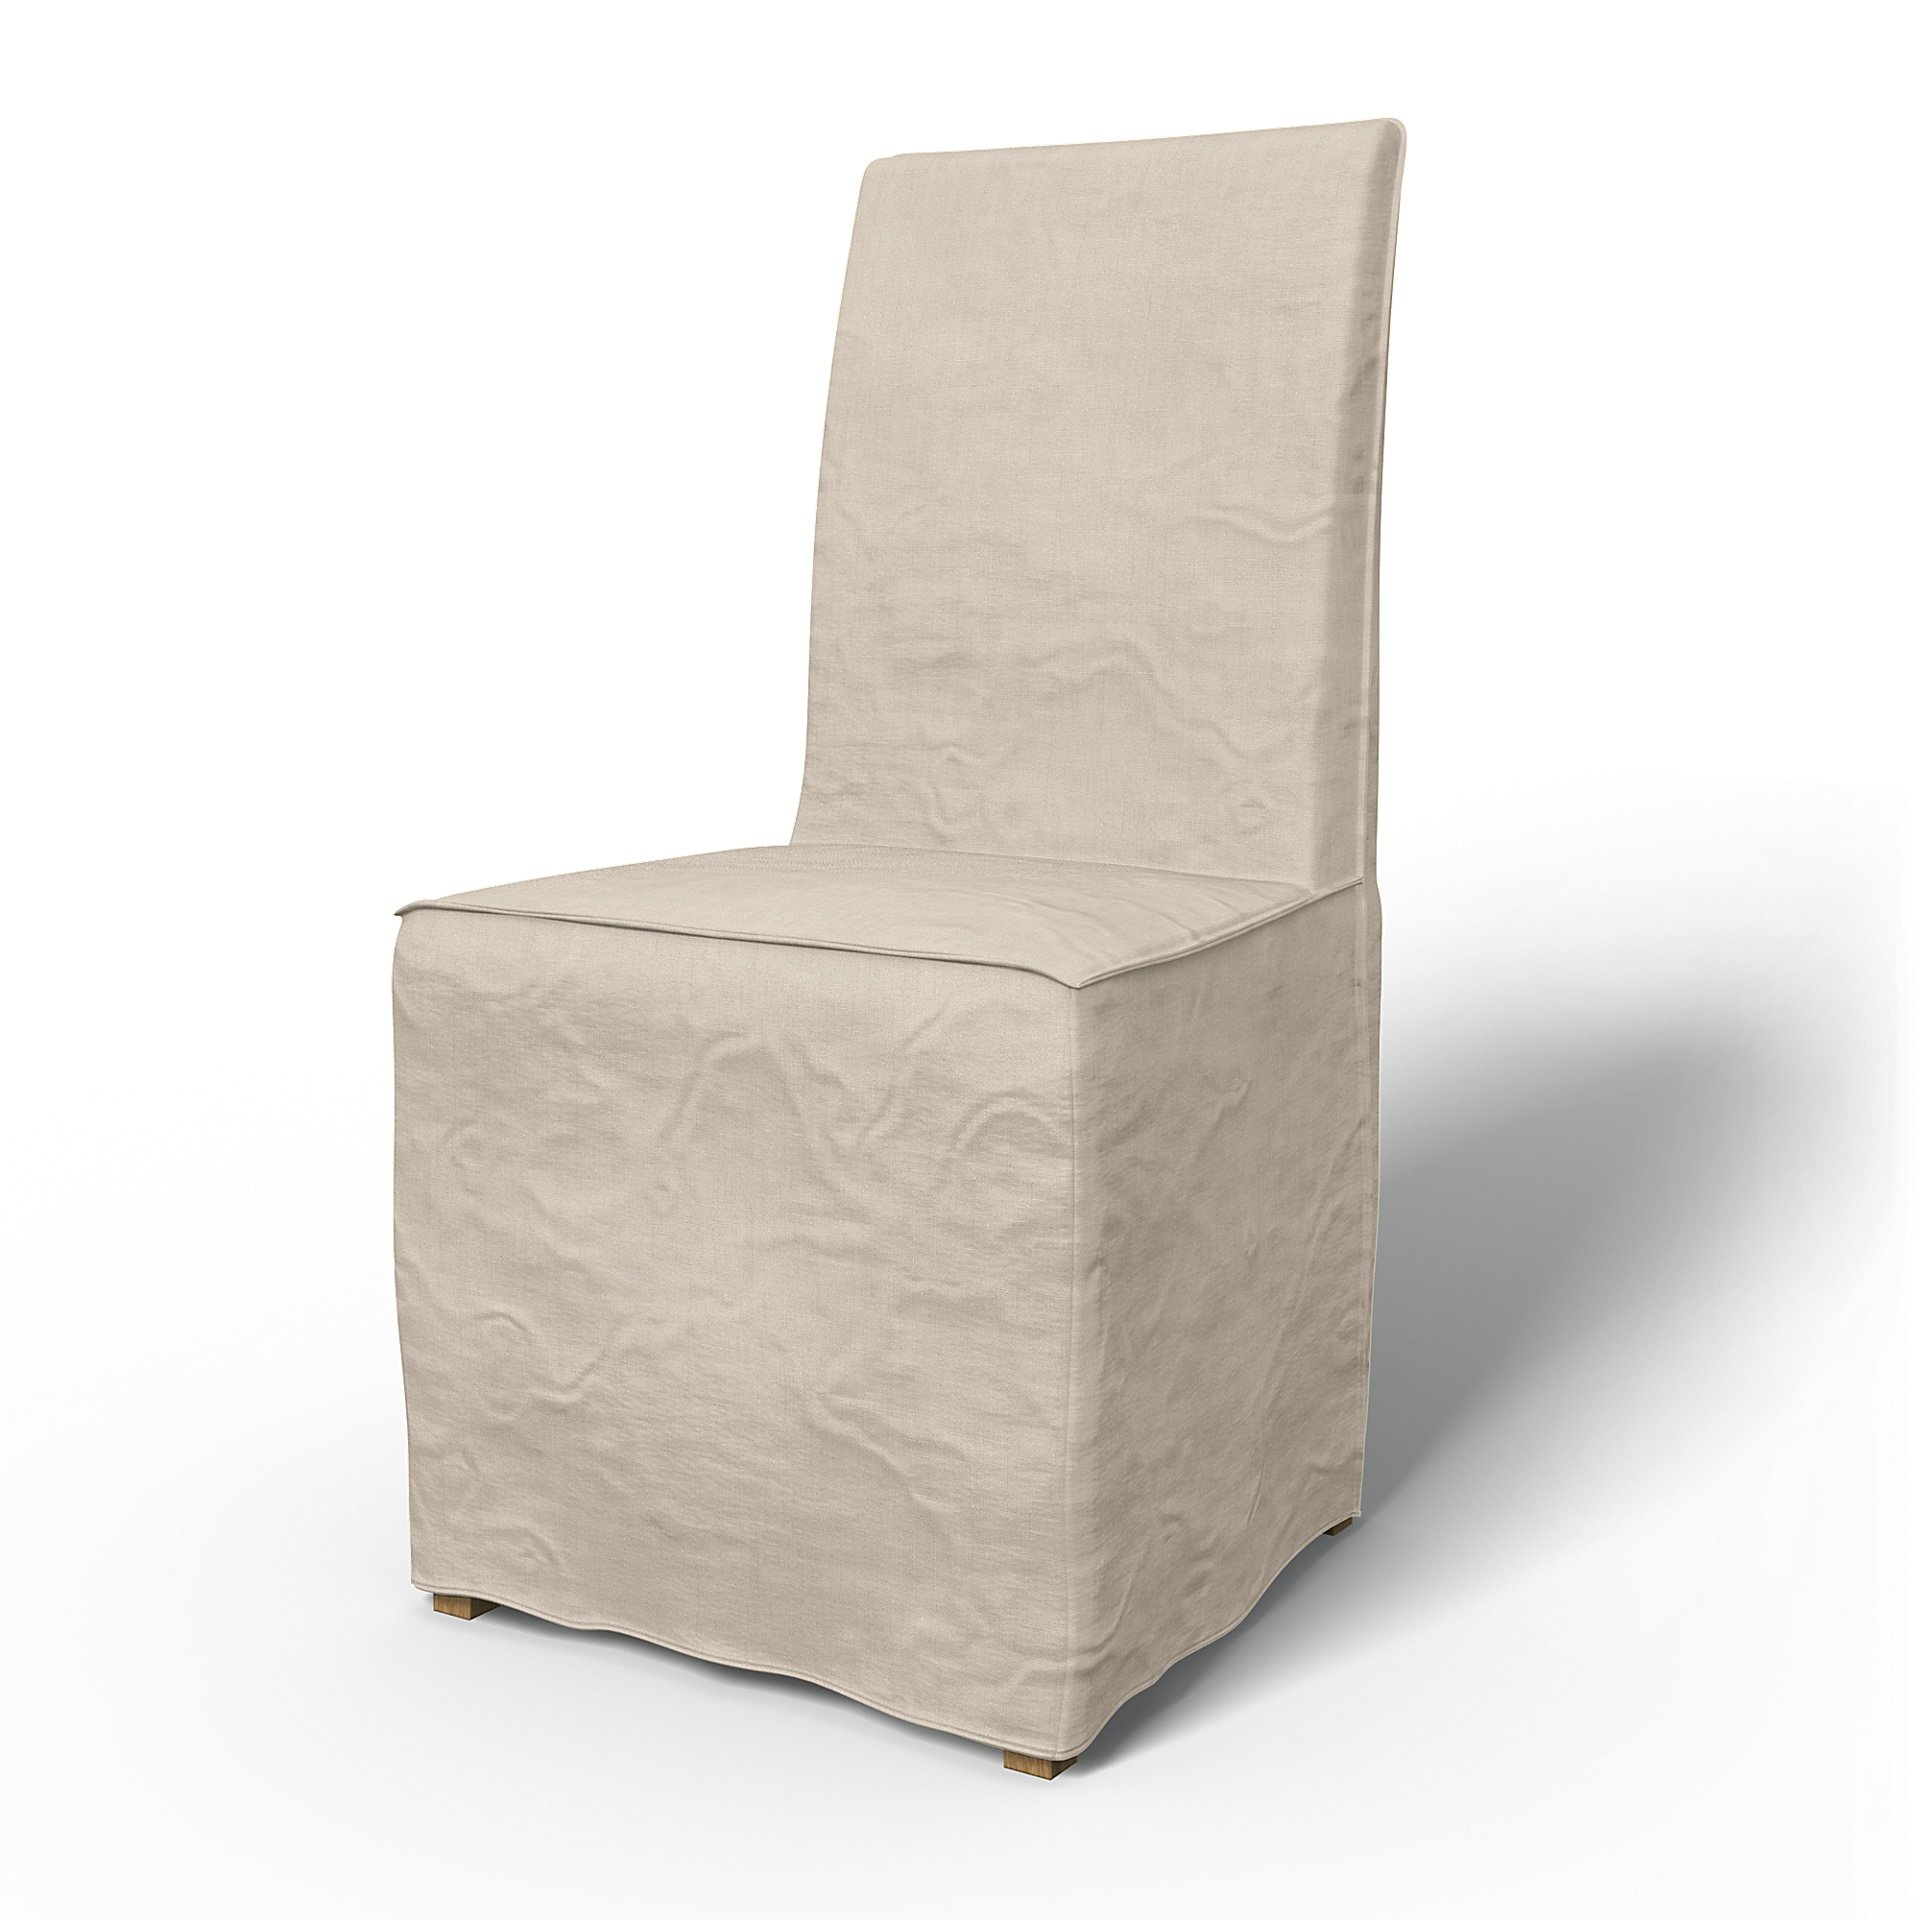 IKEA Henriksdal, Chair cover long, Urban | Bemz